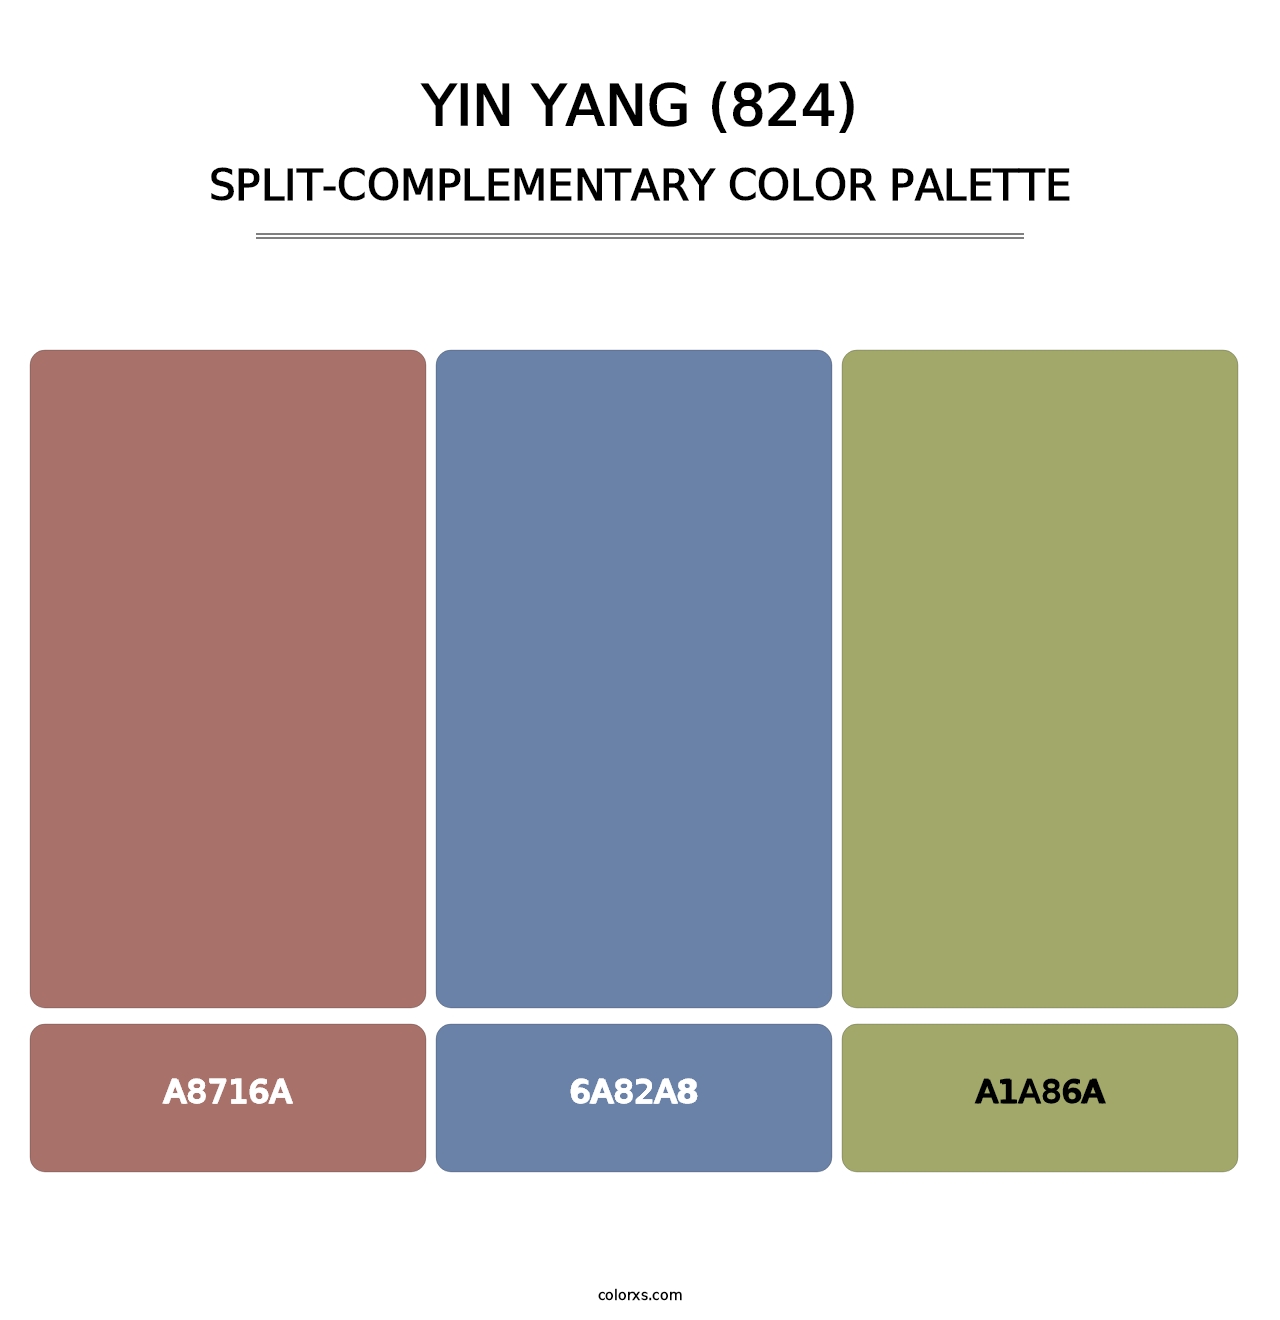 Yin Yang (824) - Split-Complementary Color Palette